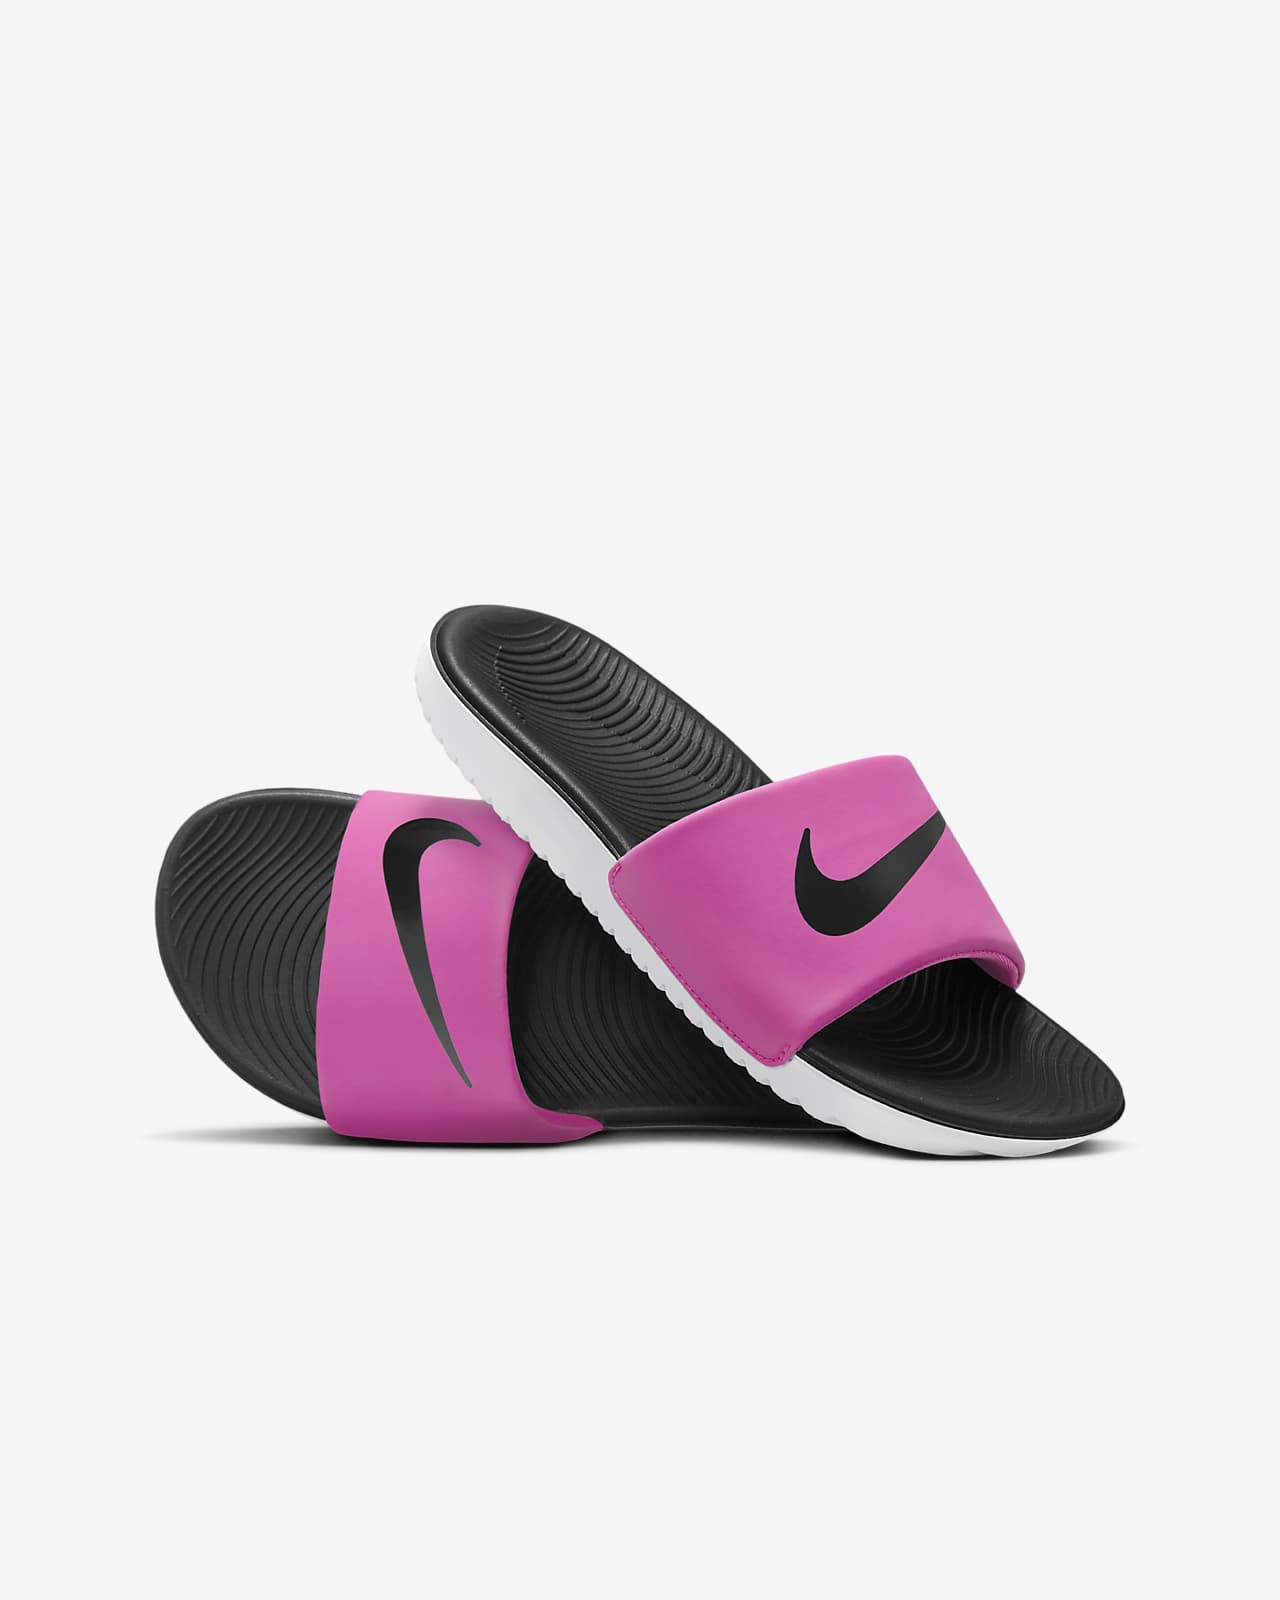 NIKE Nike Oneonta Sandals | Black Men's Sandals | YOOX